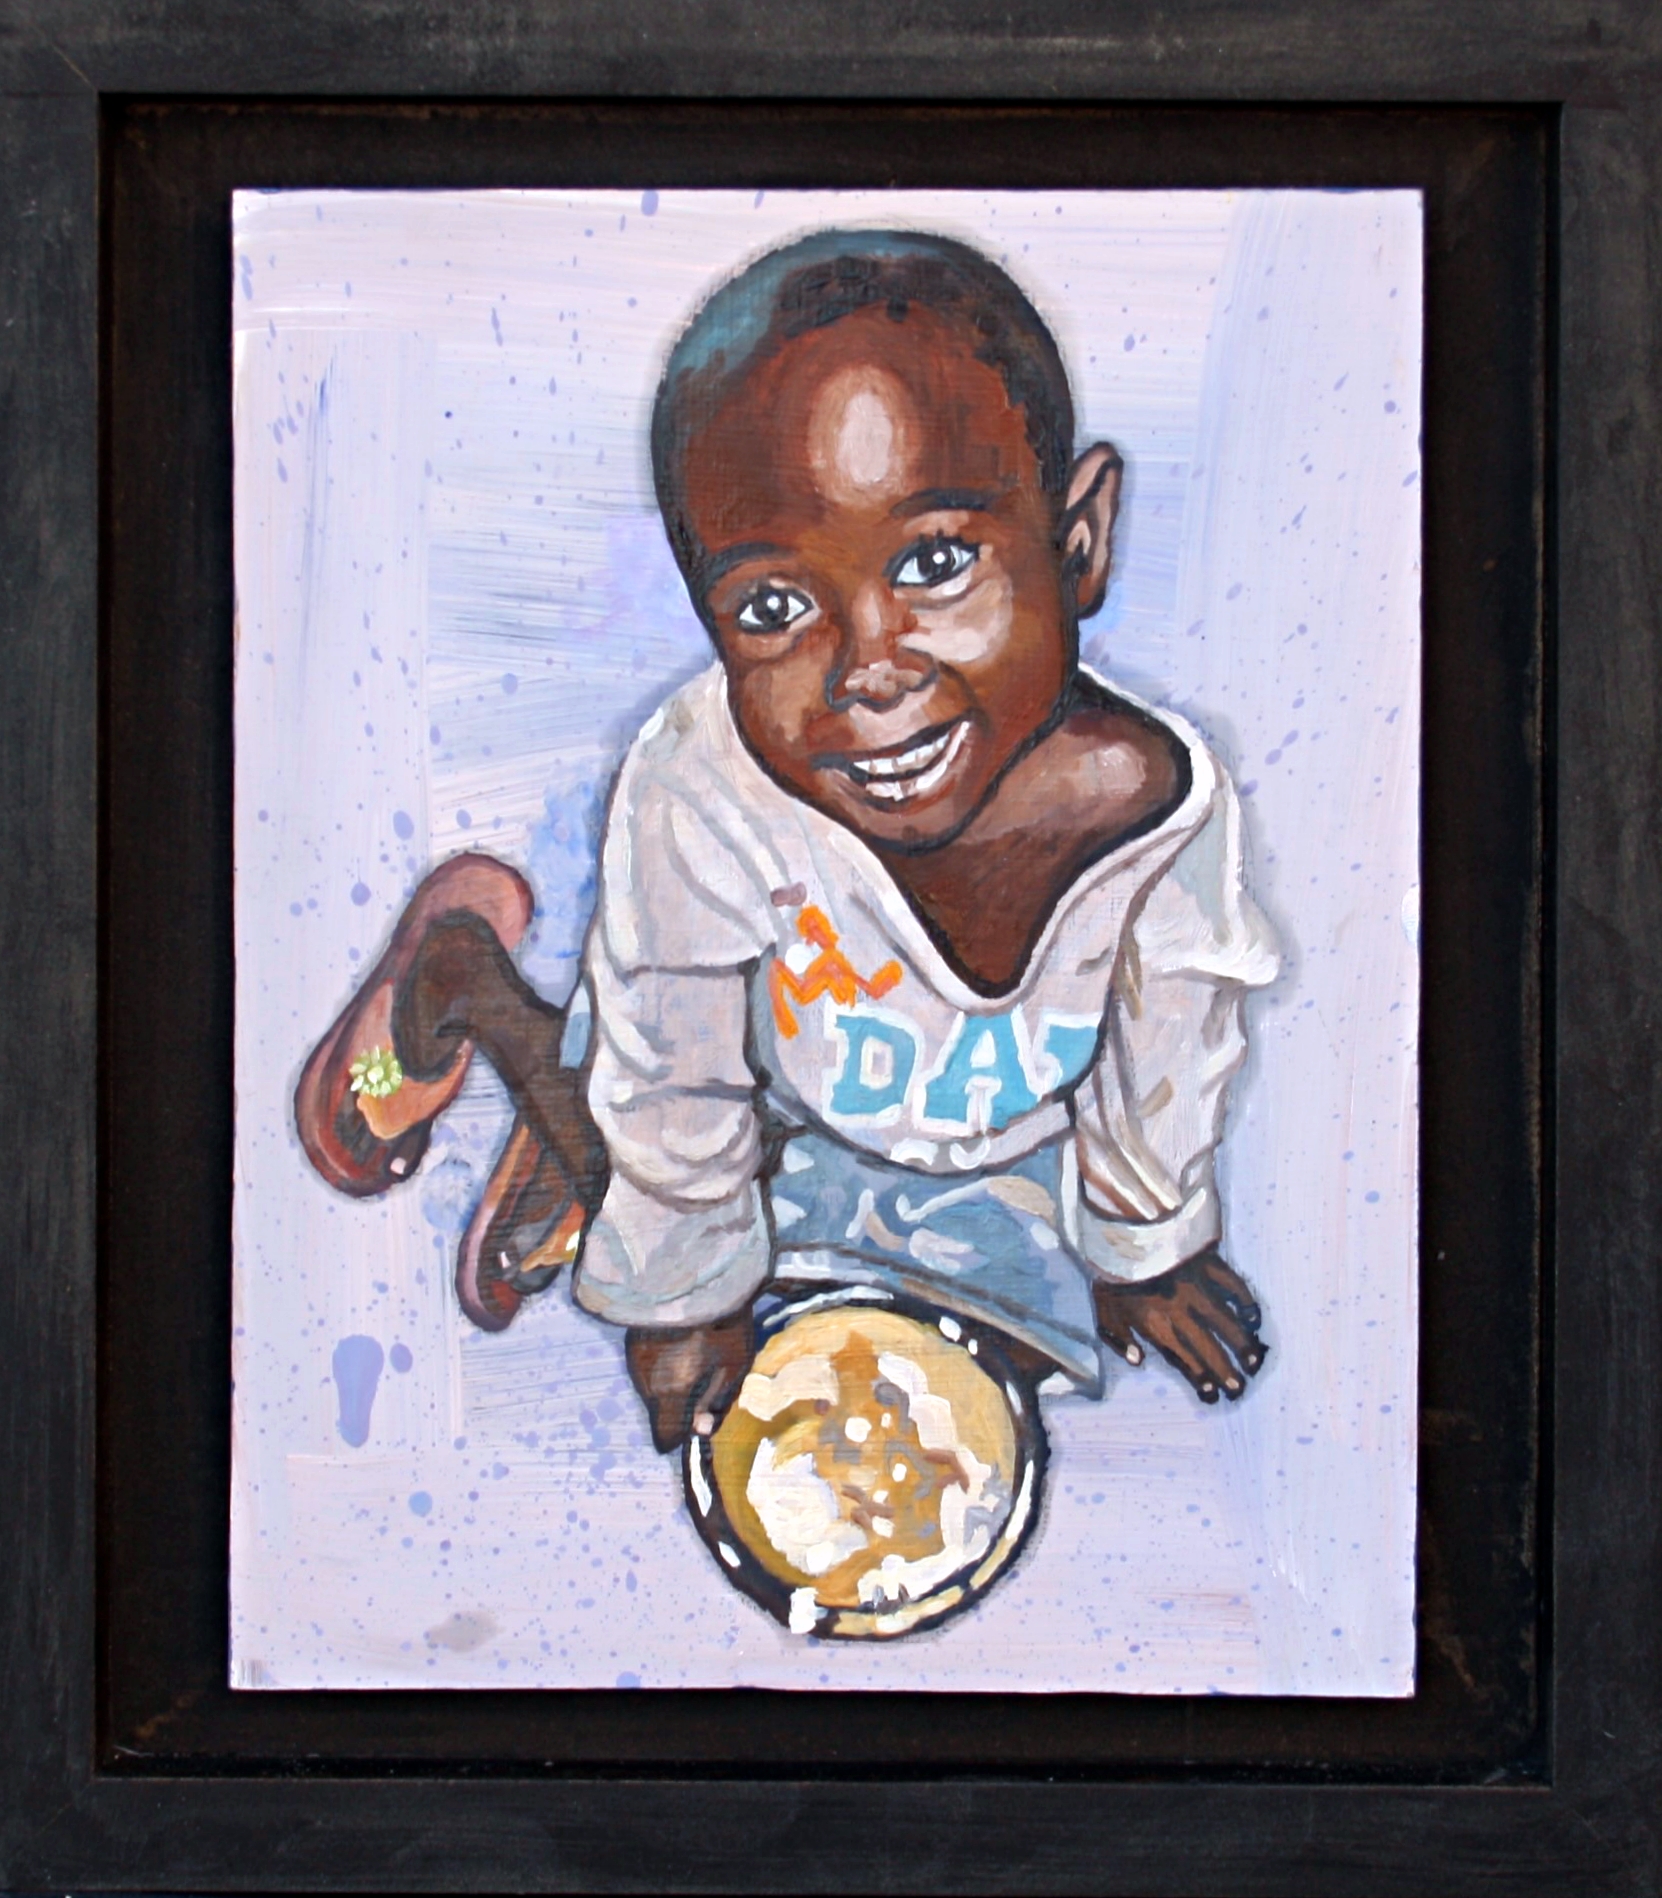 school art artist geoff phillips maple creek feeding program food meal home of hope images children africa rwanda kenya india child baby dream centre alberta canada paint painting 